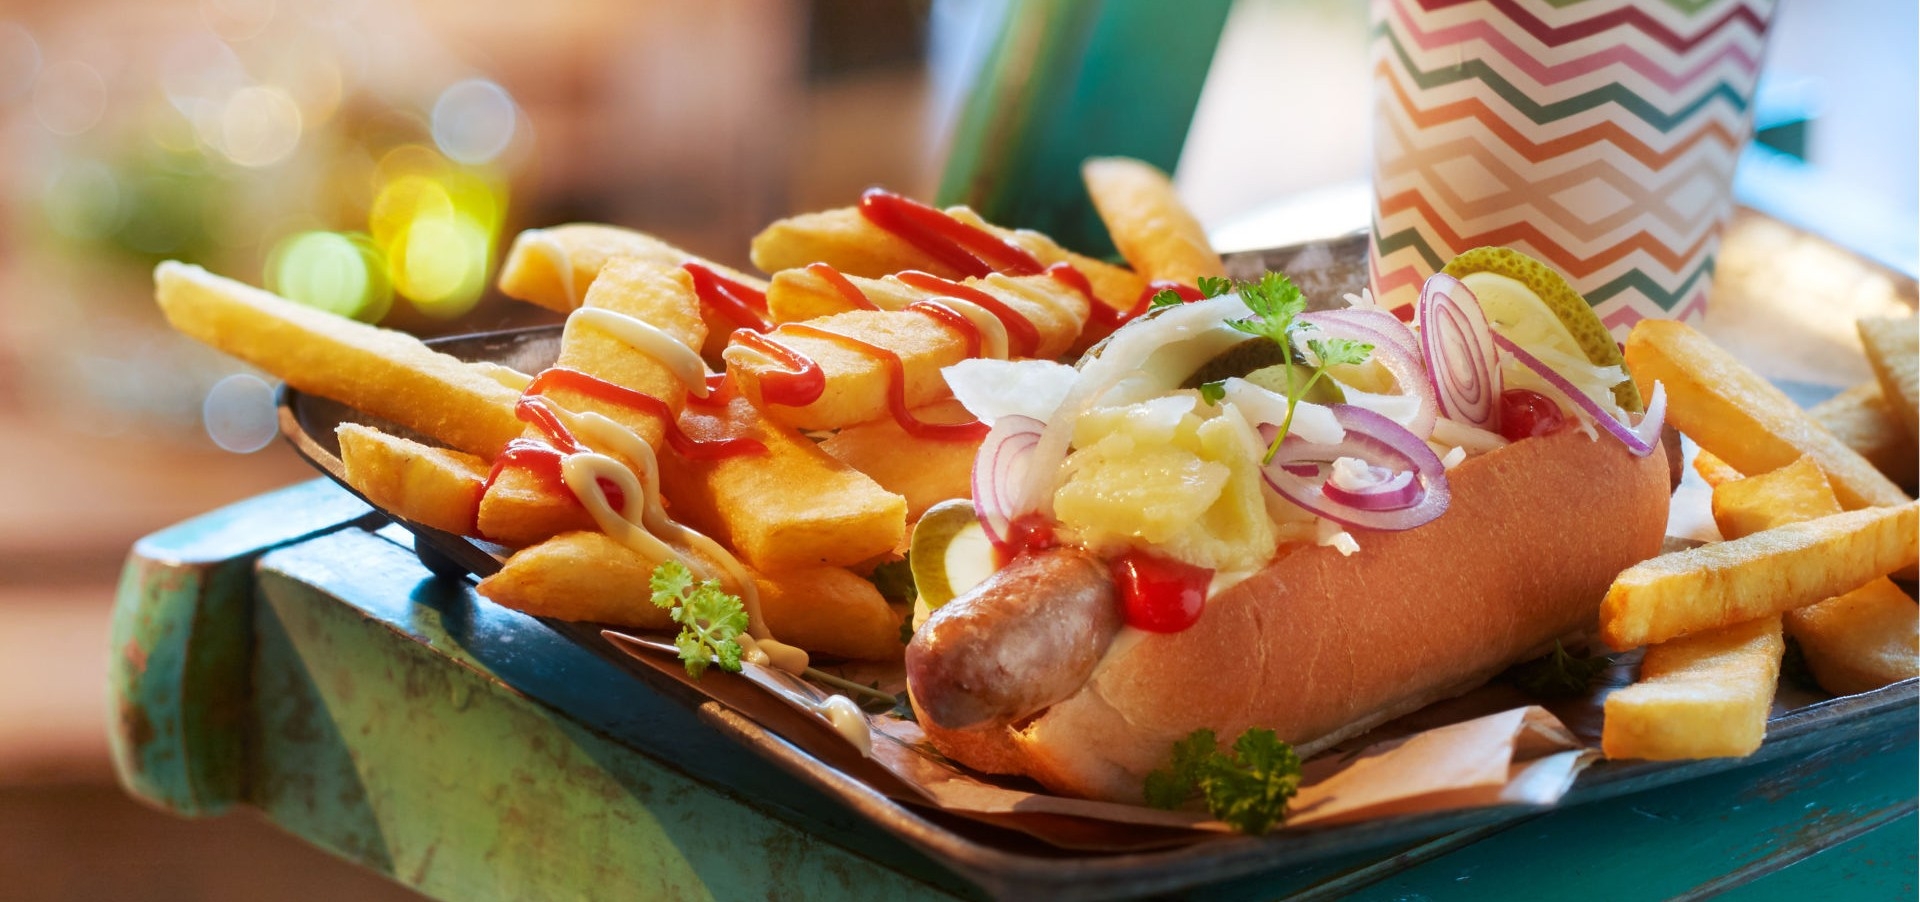 aviko_urban-food-int_-hot-dog-mit-super-crunch-pommes